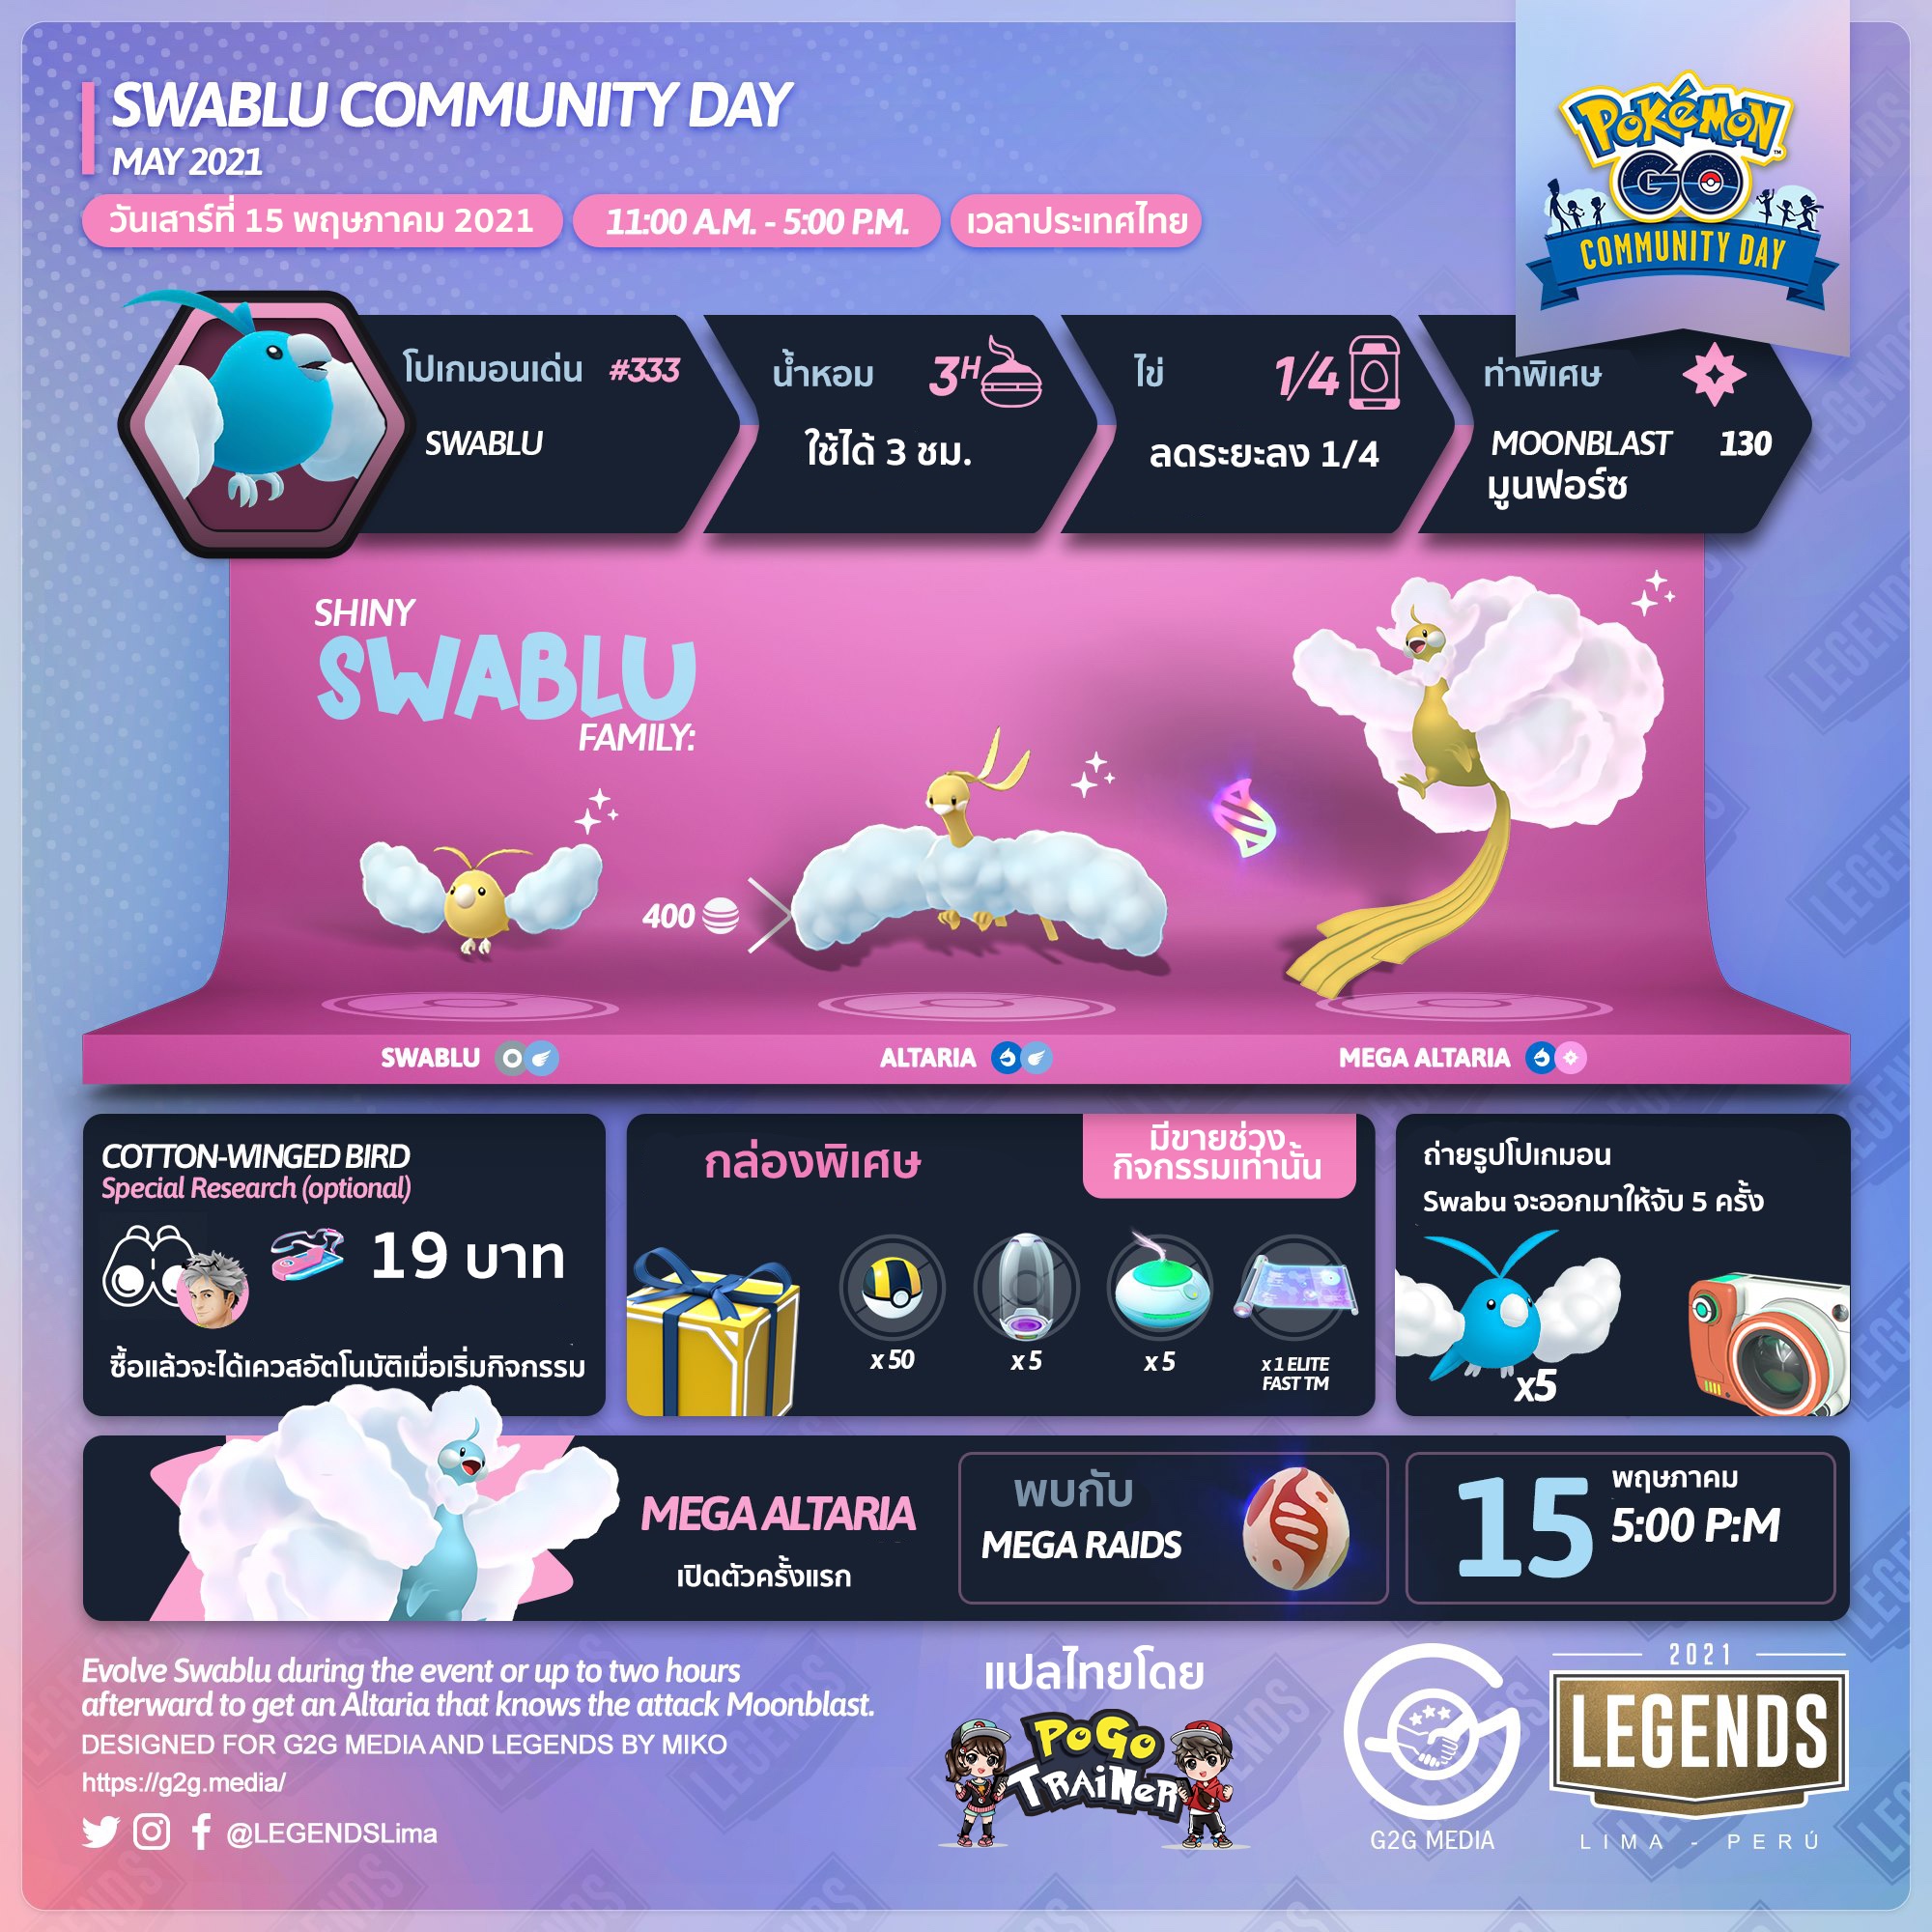 communityday may21 info